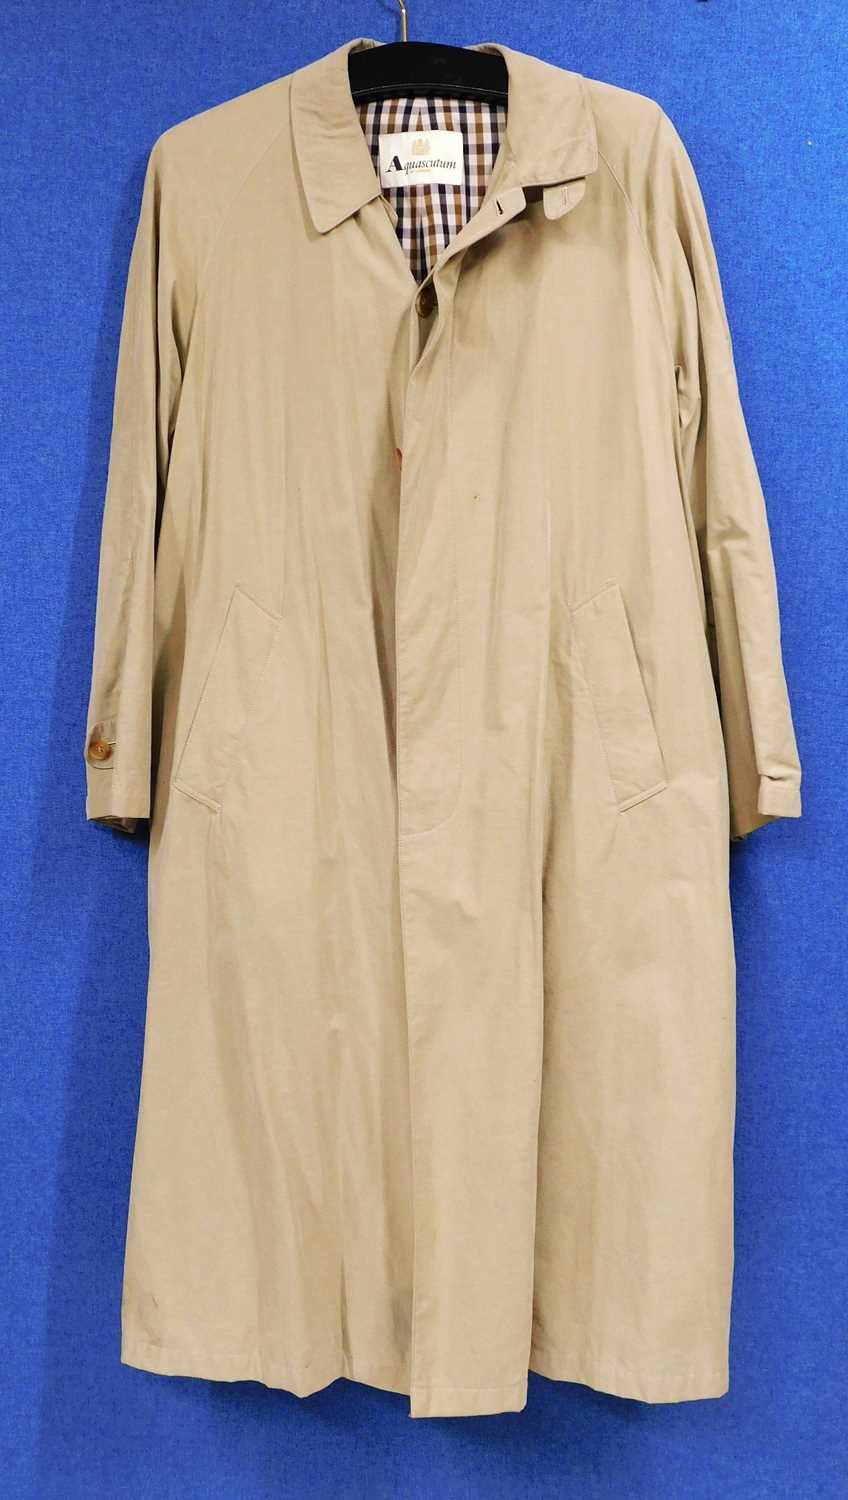 A gentleman's Aquascutum single breasted raincoat, size 40 Reg